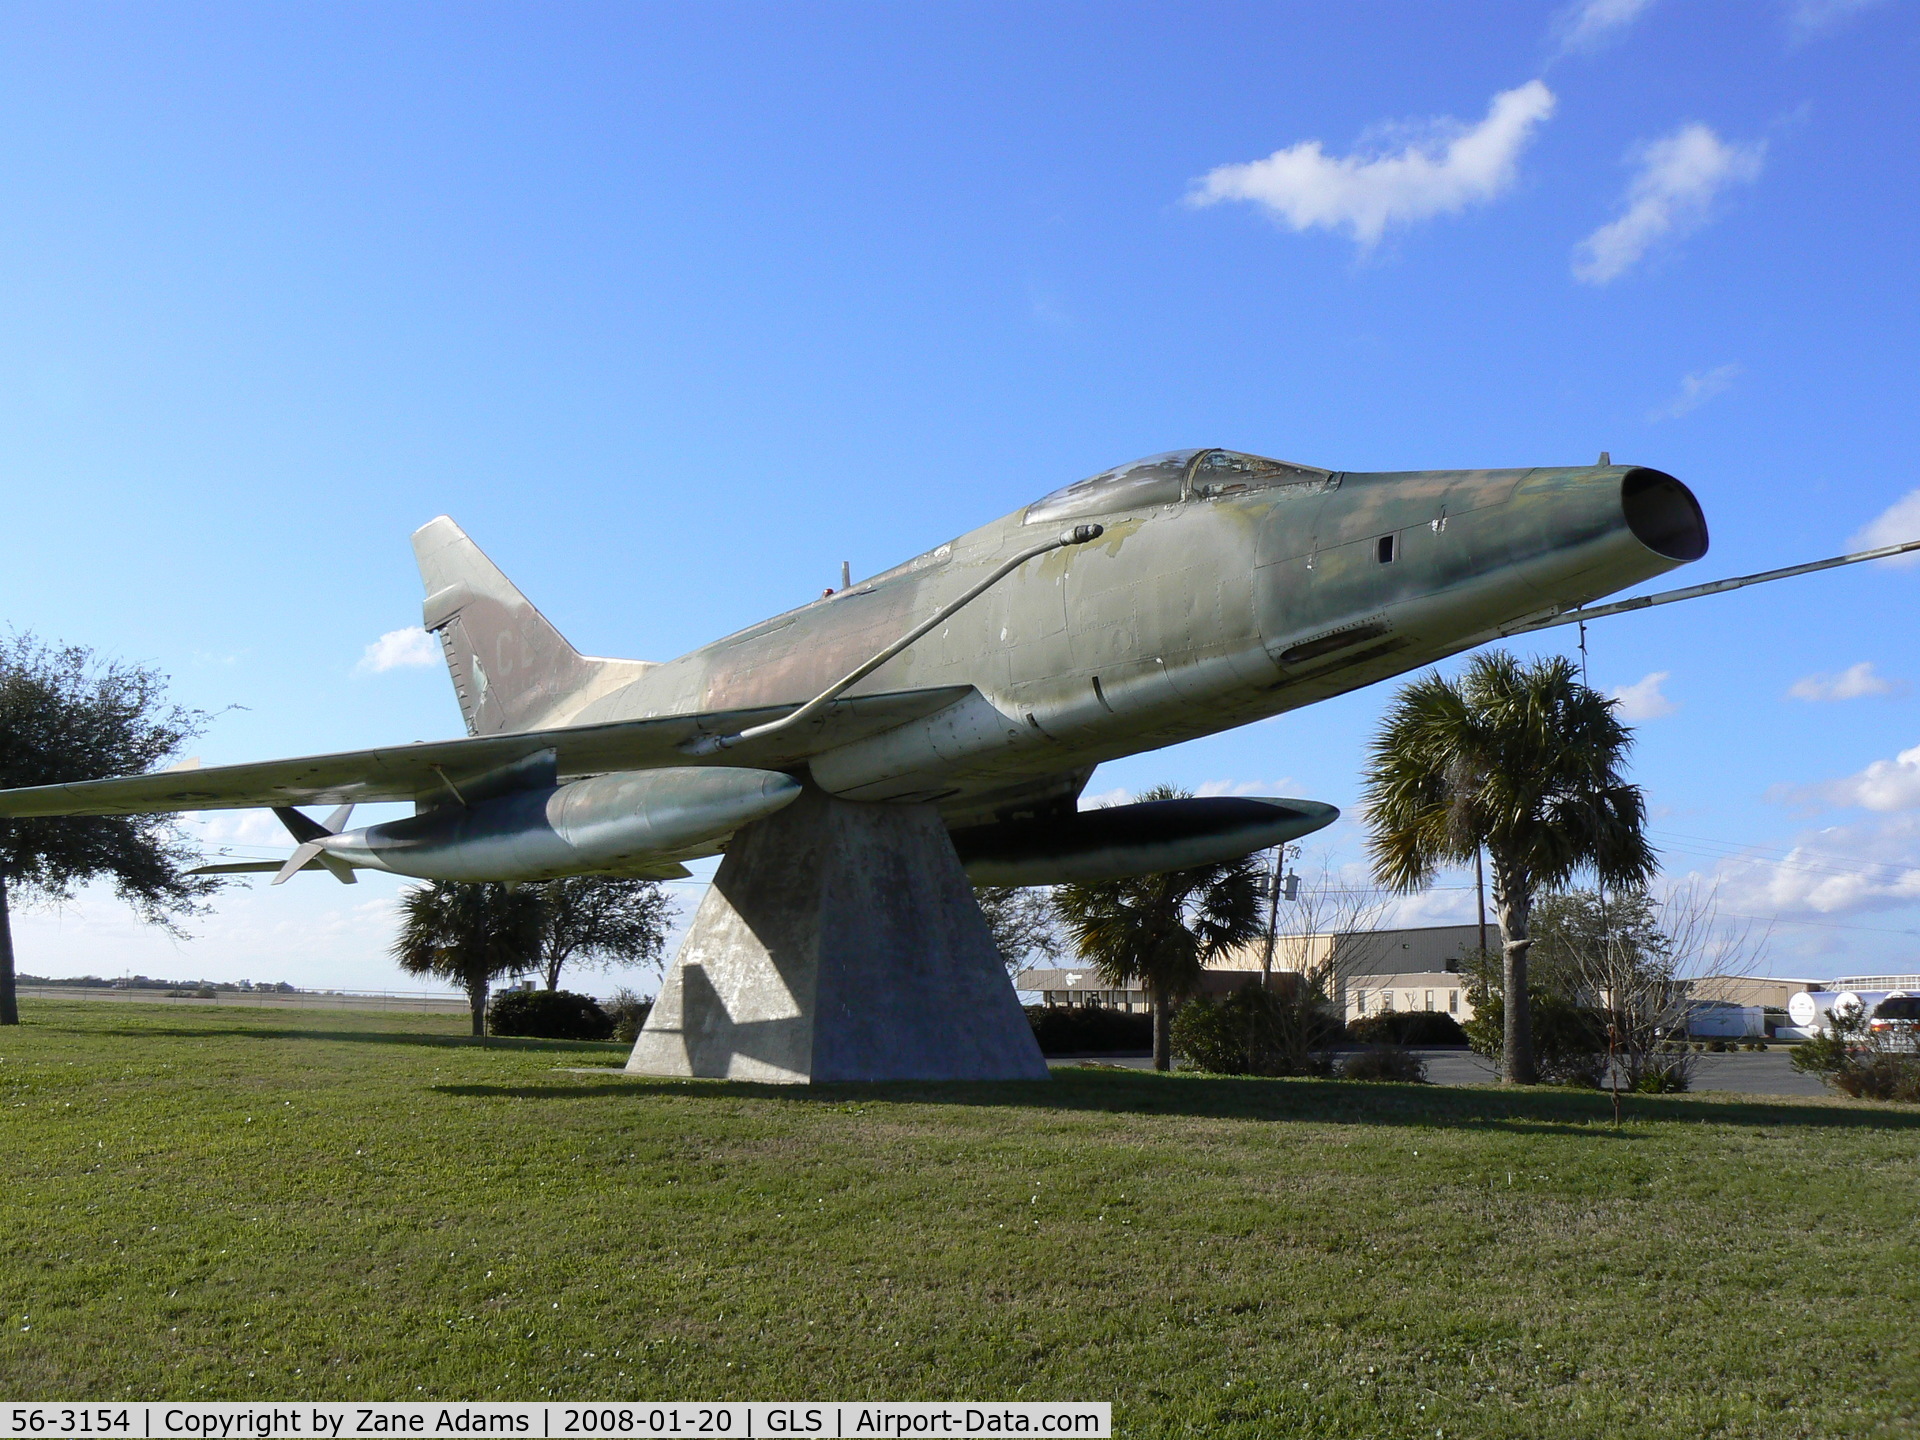 56-3154, 1956 North American F-100D Super Sabre C/N 235-350, Lone Star Flight Museum